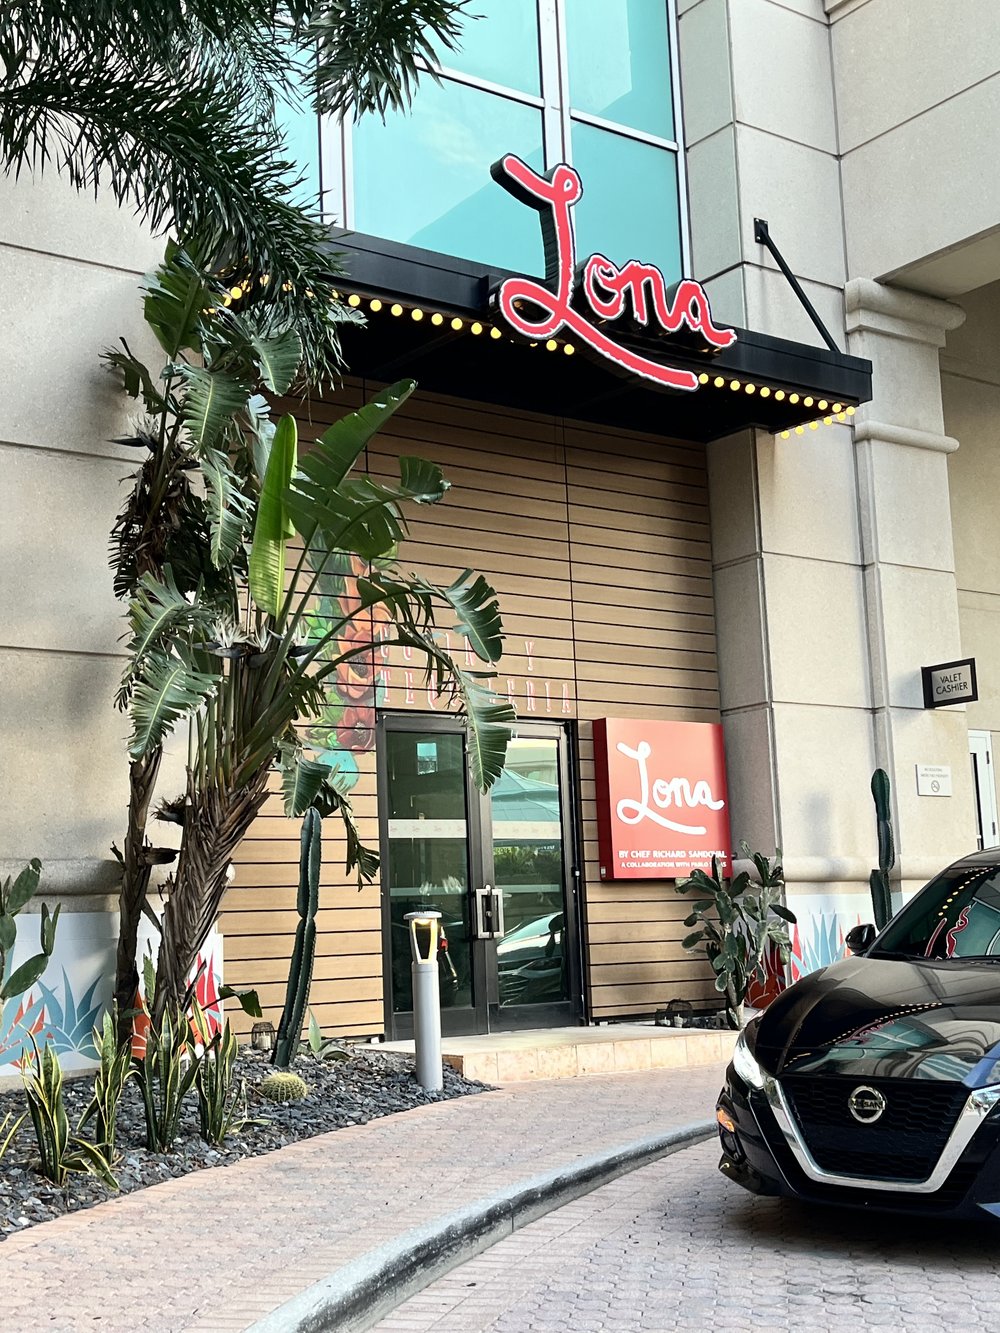 Lona Mexican restaurant Marriott Tampa Florida.jpg